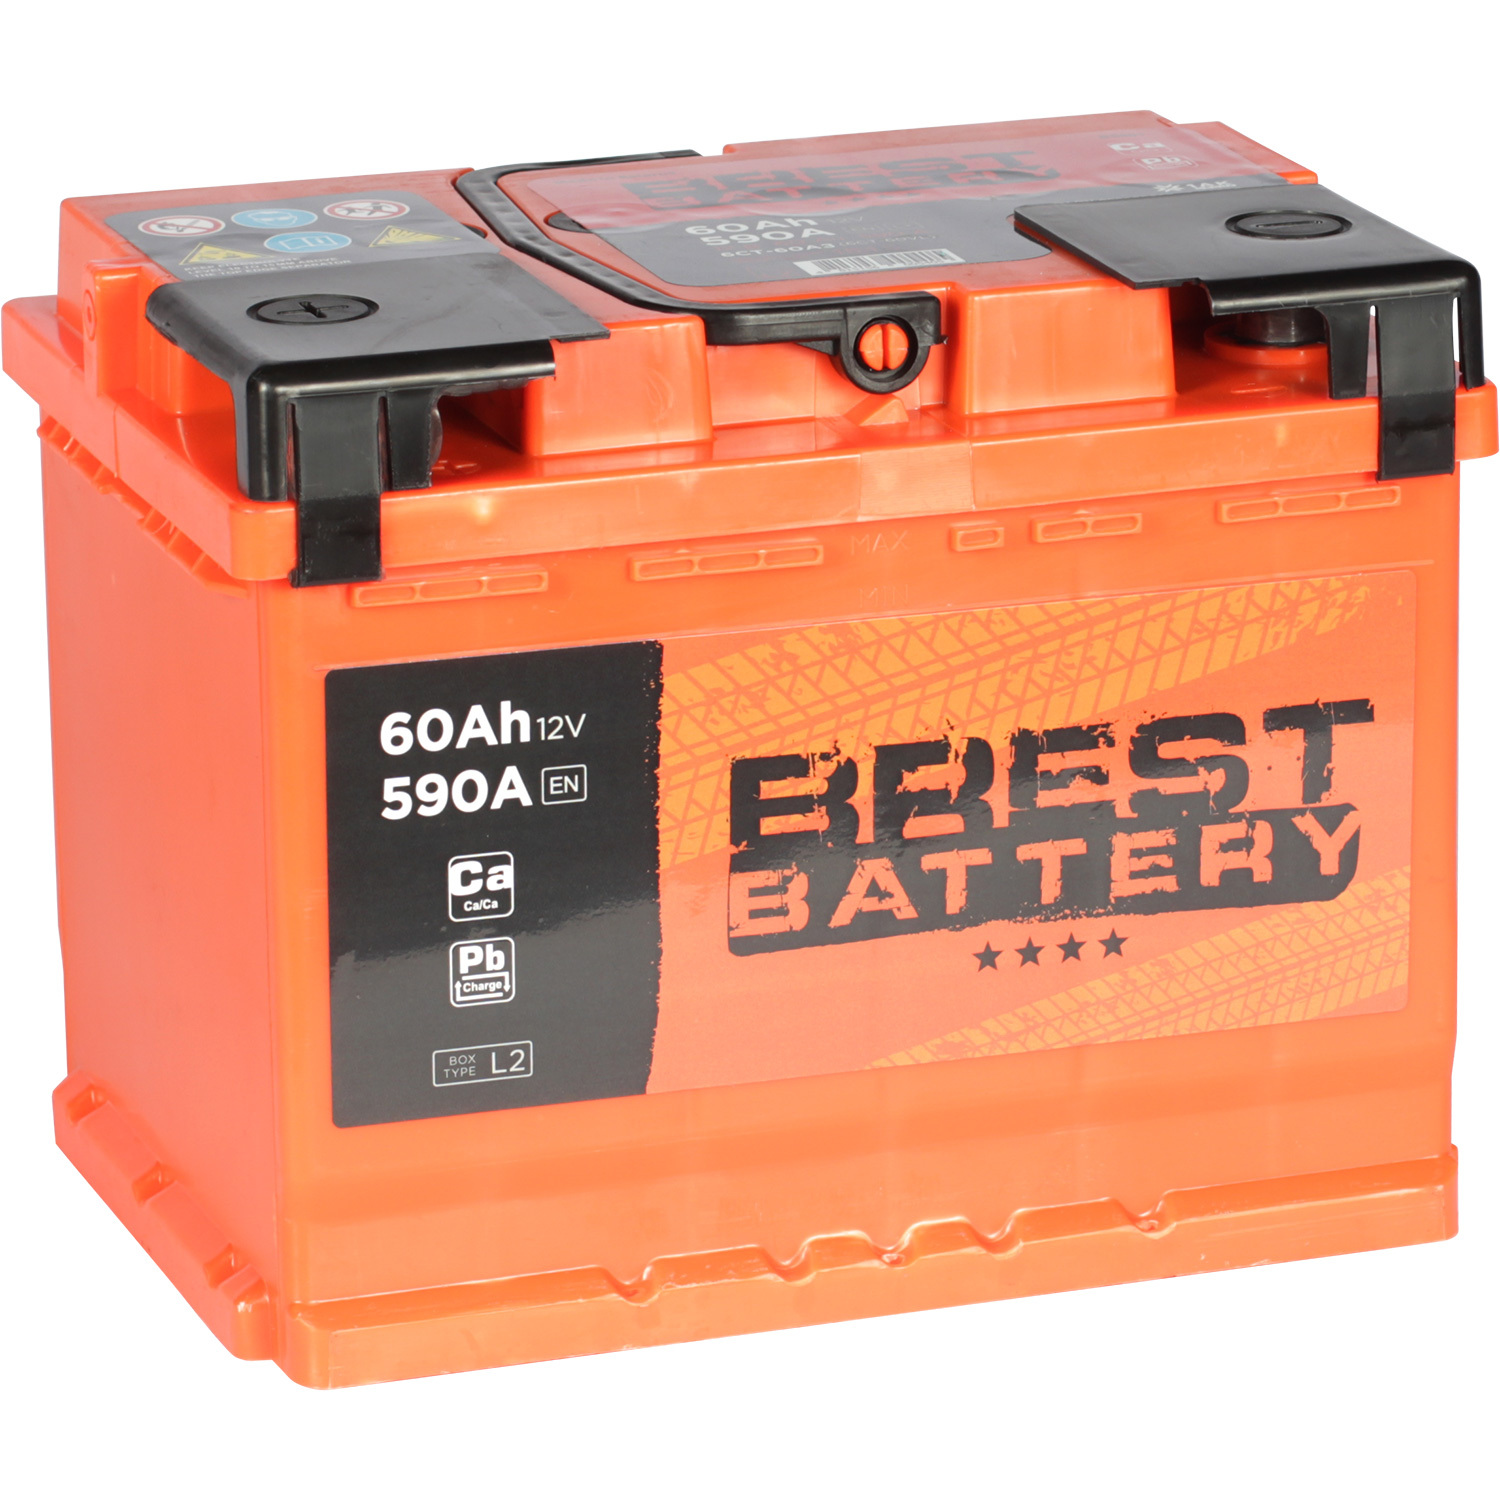 brest battery автомобильный аккумулятор brest battery 110 ач обратная полярность l5 Brest Battery Автомобильный аккумулятор Brest Battery 60 Ач прямая полярность L2